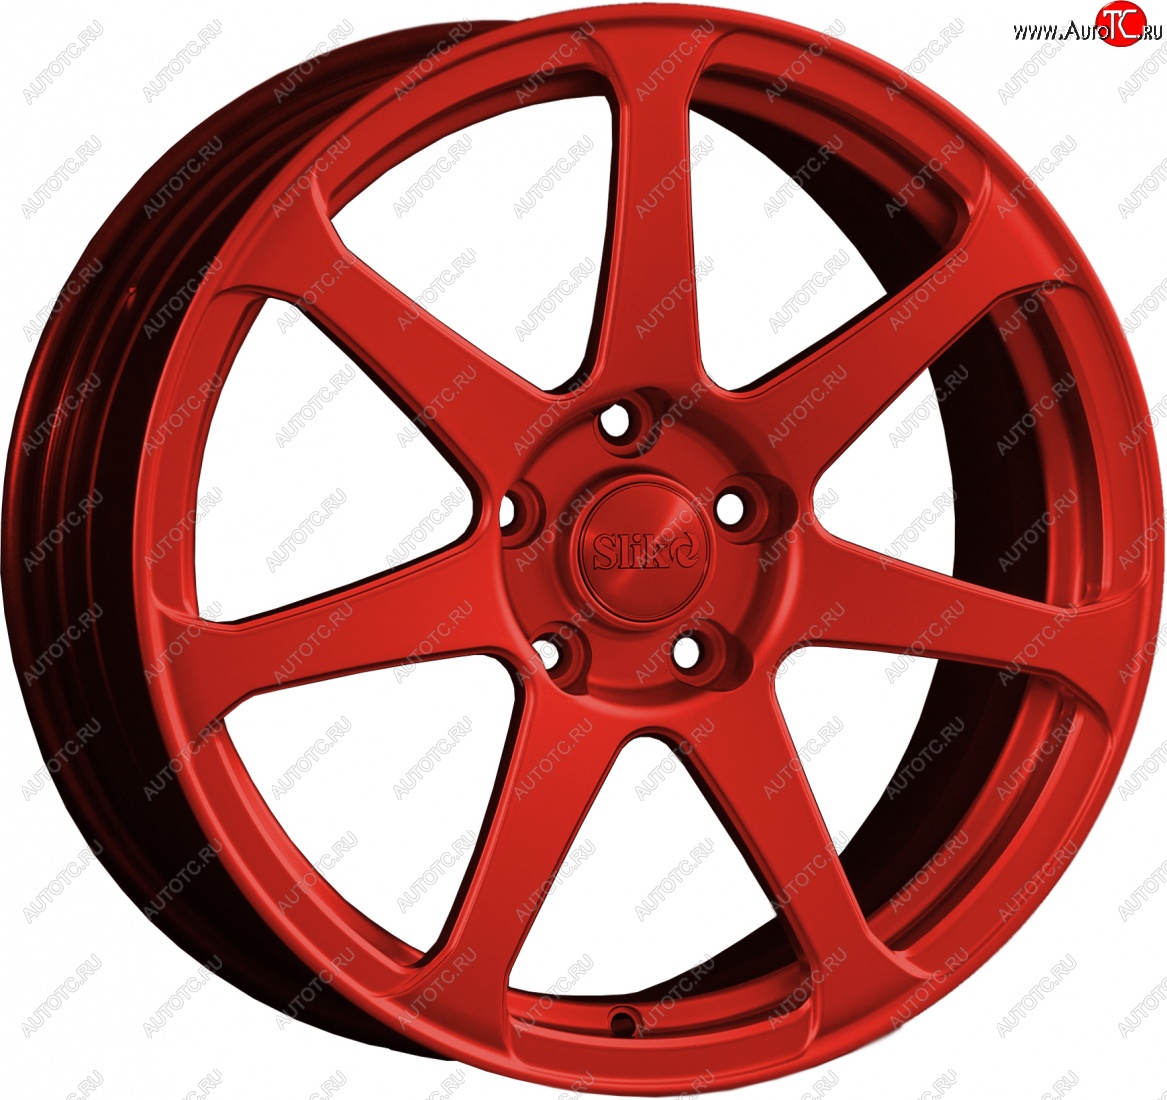 14 499 р. Кованый диск Slik classik R17x7.5 Candy RED красный 7.5x17 Chevrolet Lanos T100 седан (2002-2017) 4x100.0xDIA56.6xET49.0 (Цвет: Candy RED красный 7.5x17)